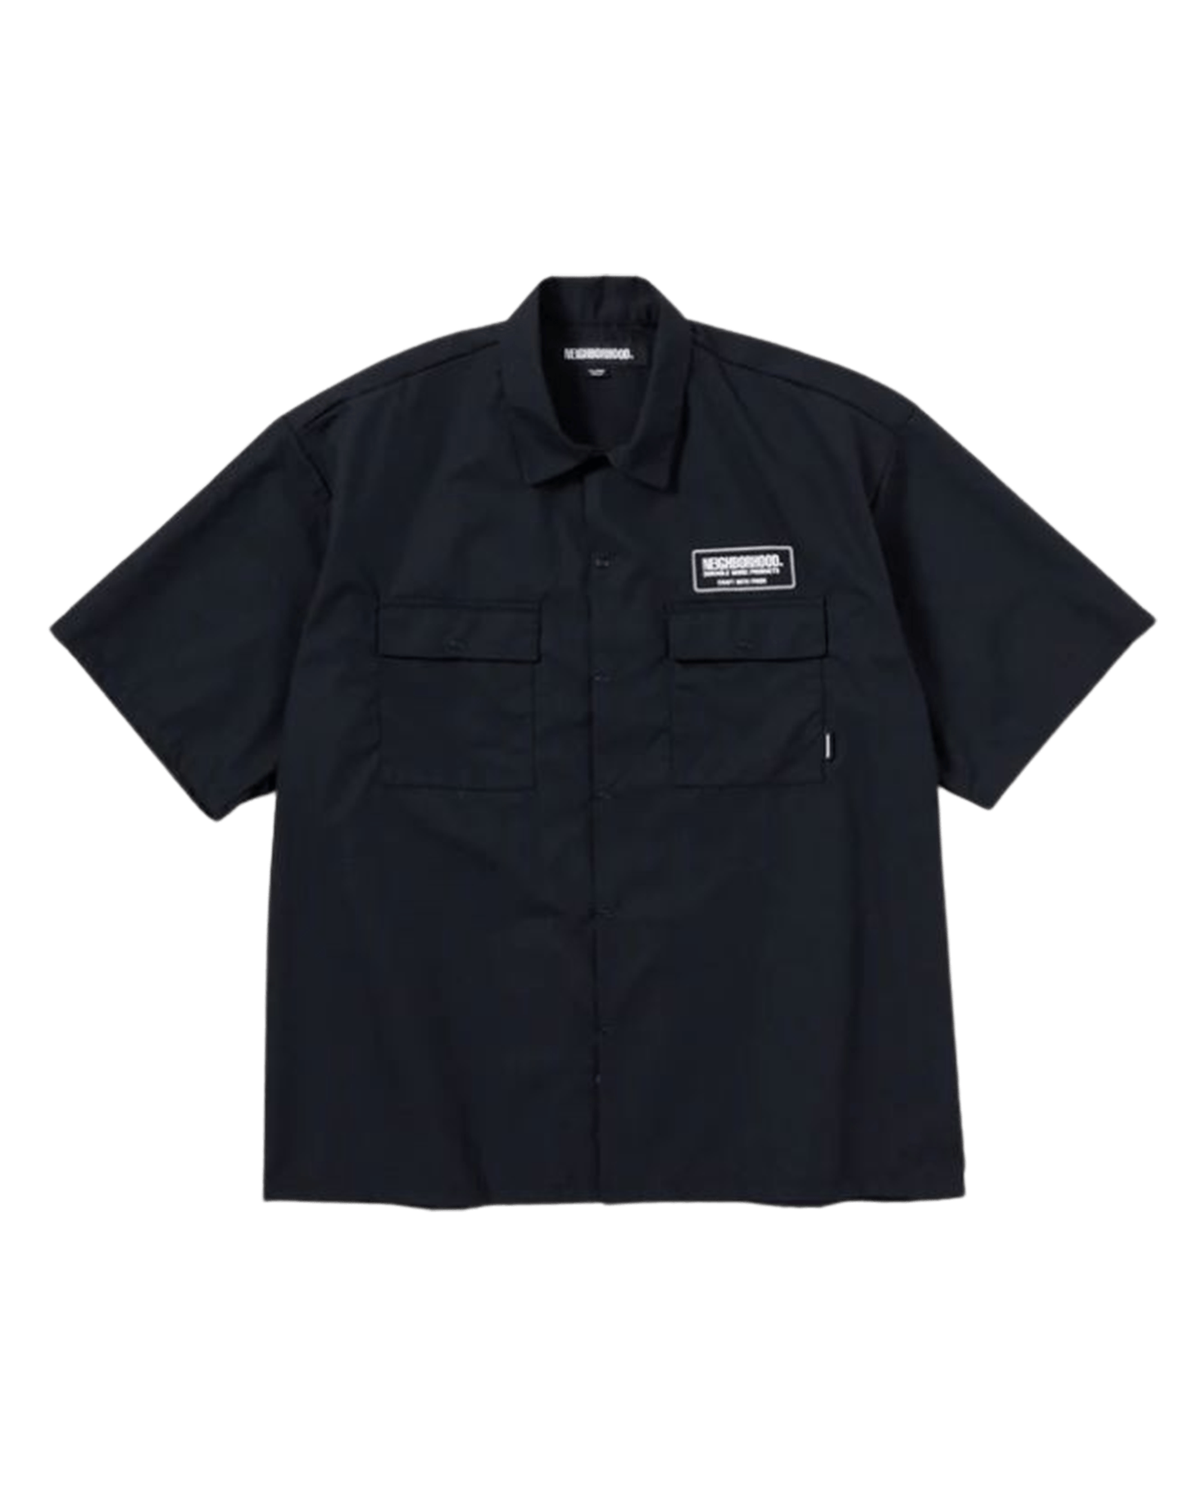 Classic Work Shirt Neighborhood Tops Shirts Black